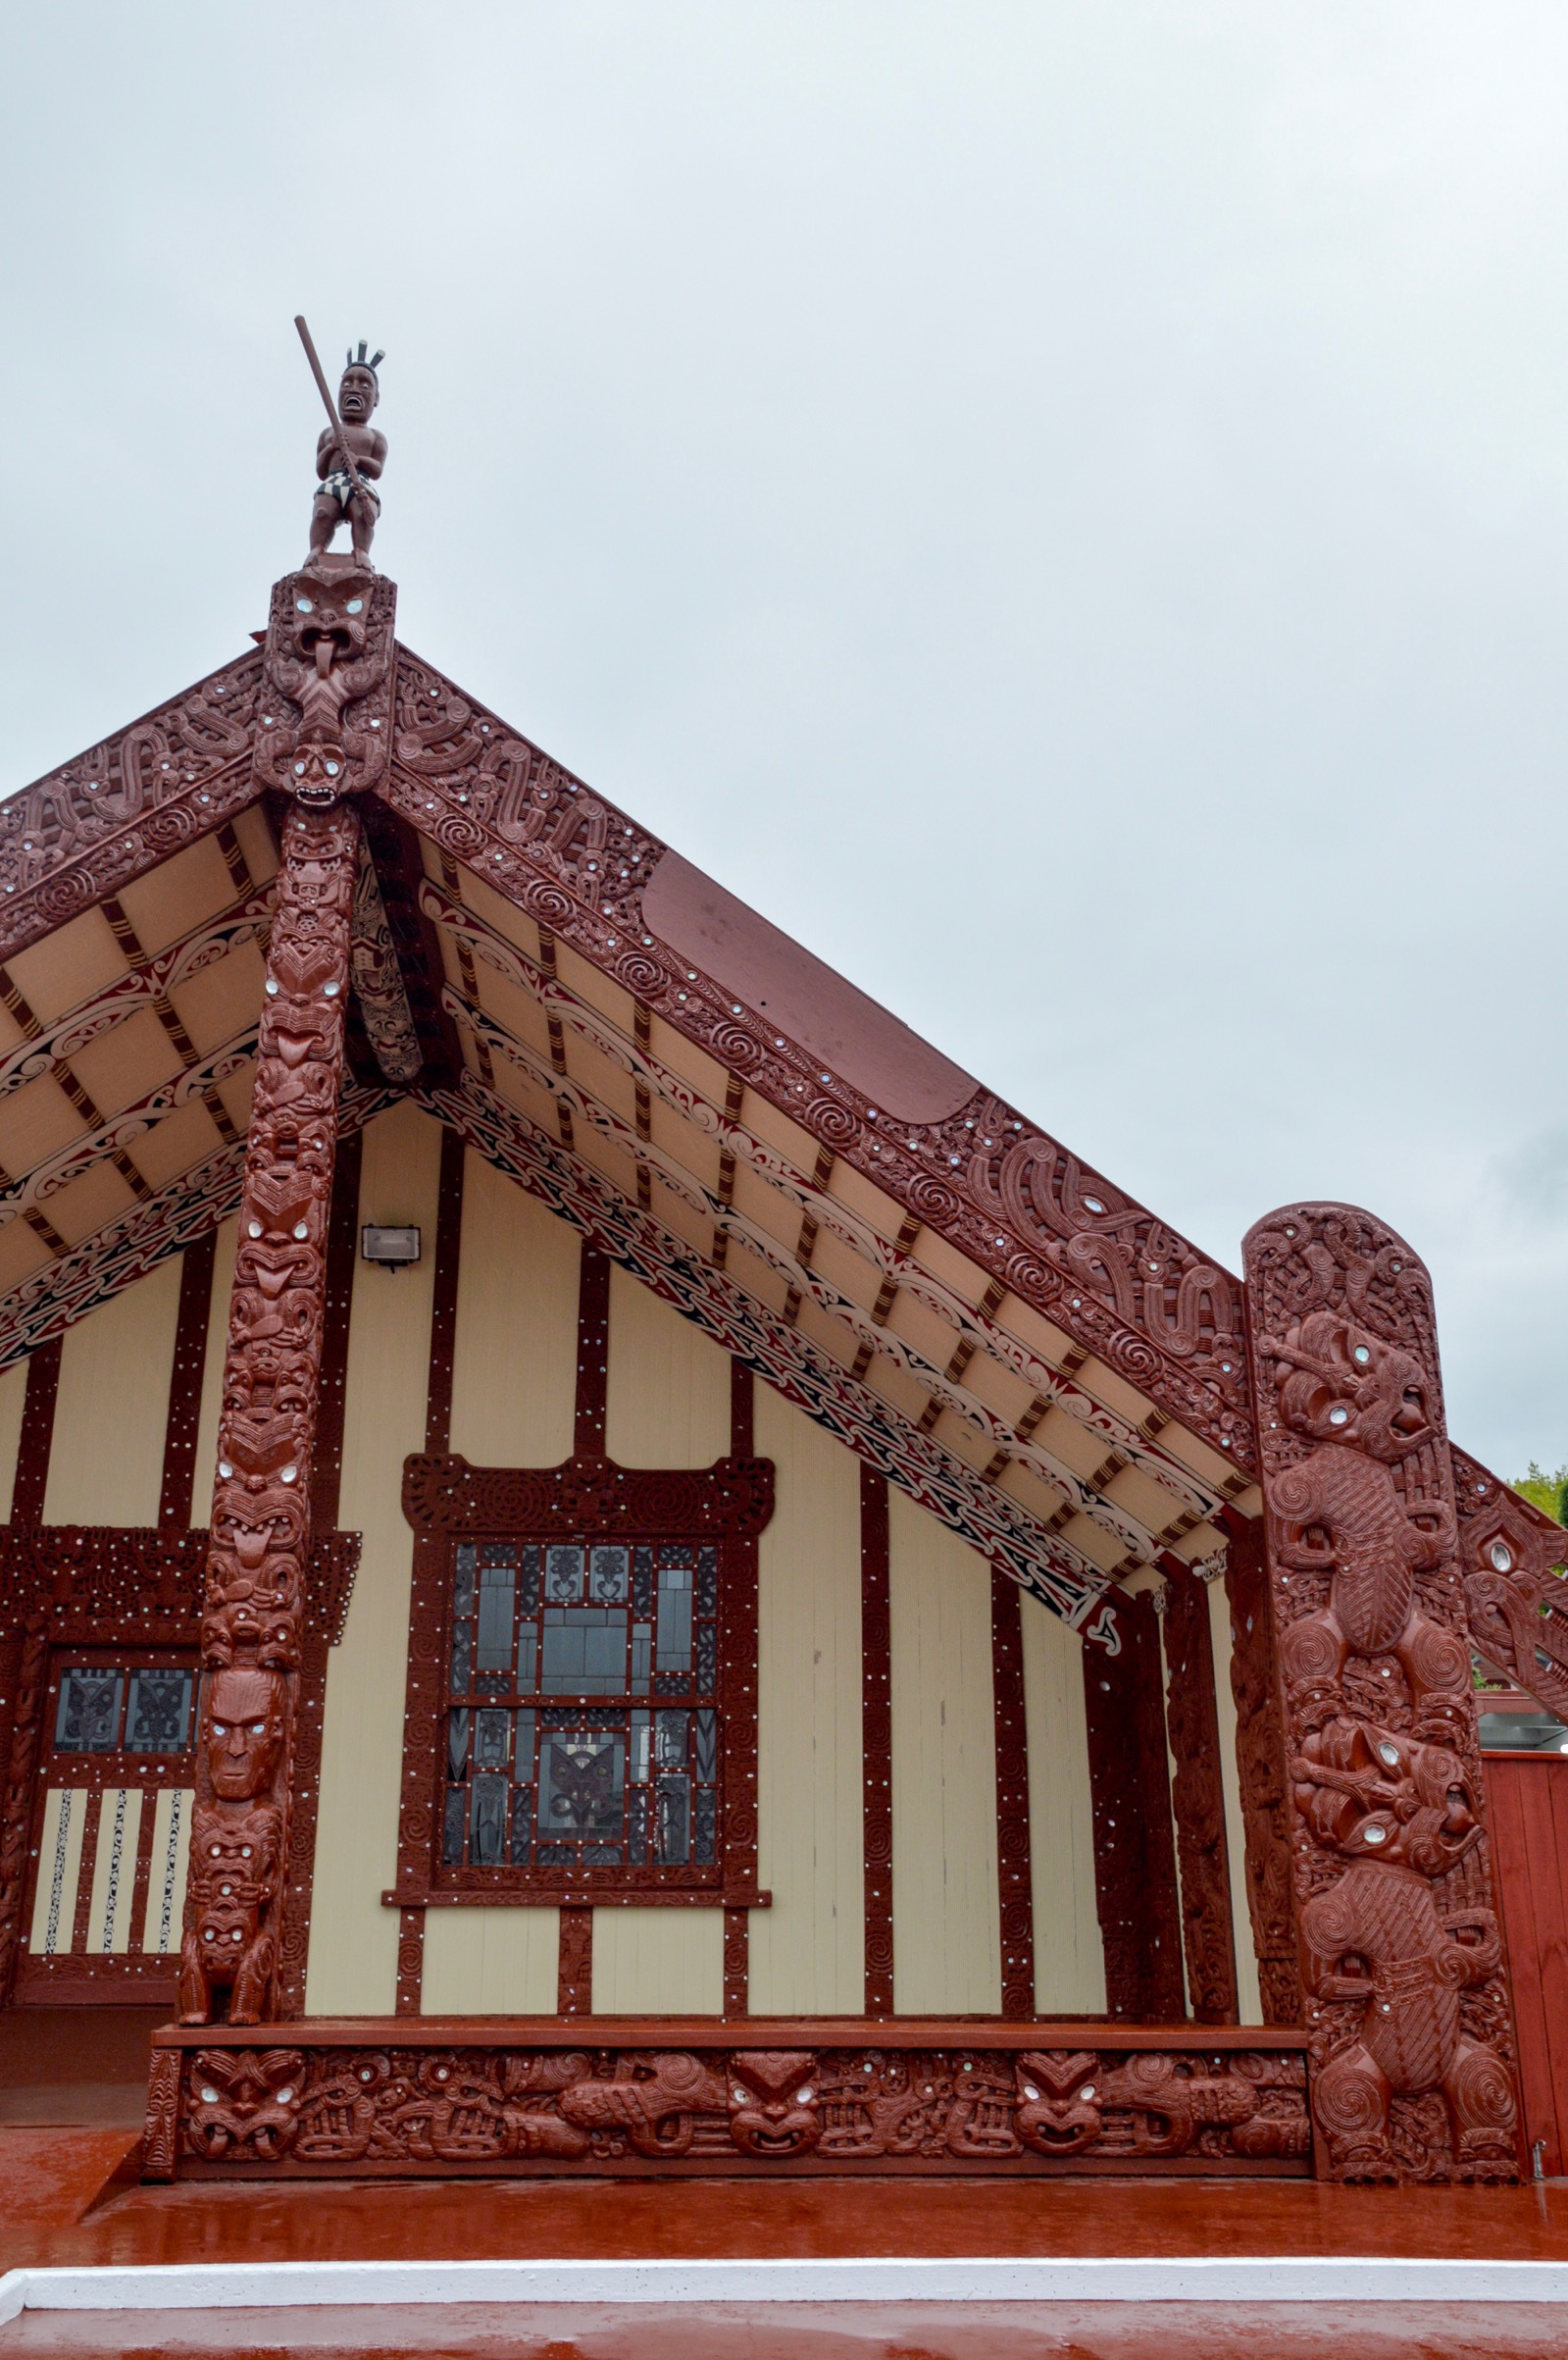 Te Papaiouru Marae conference center, Rotorua, New Zealand